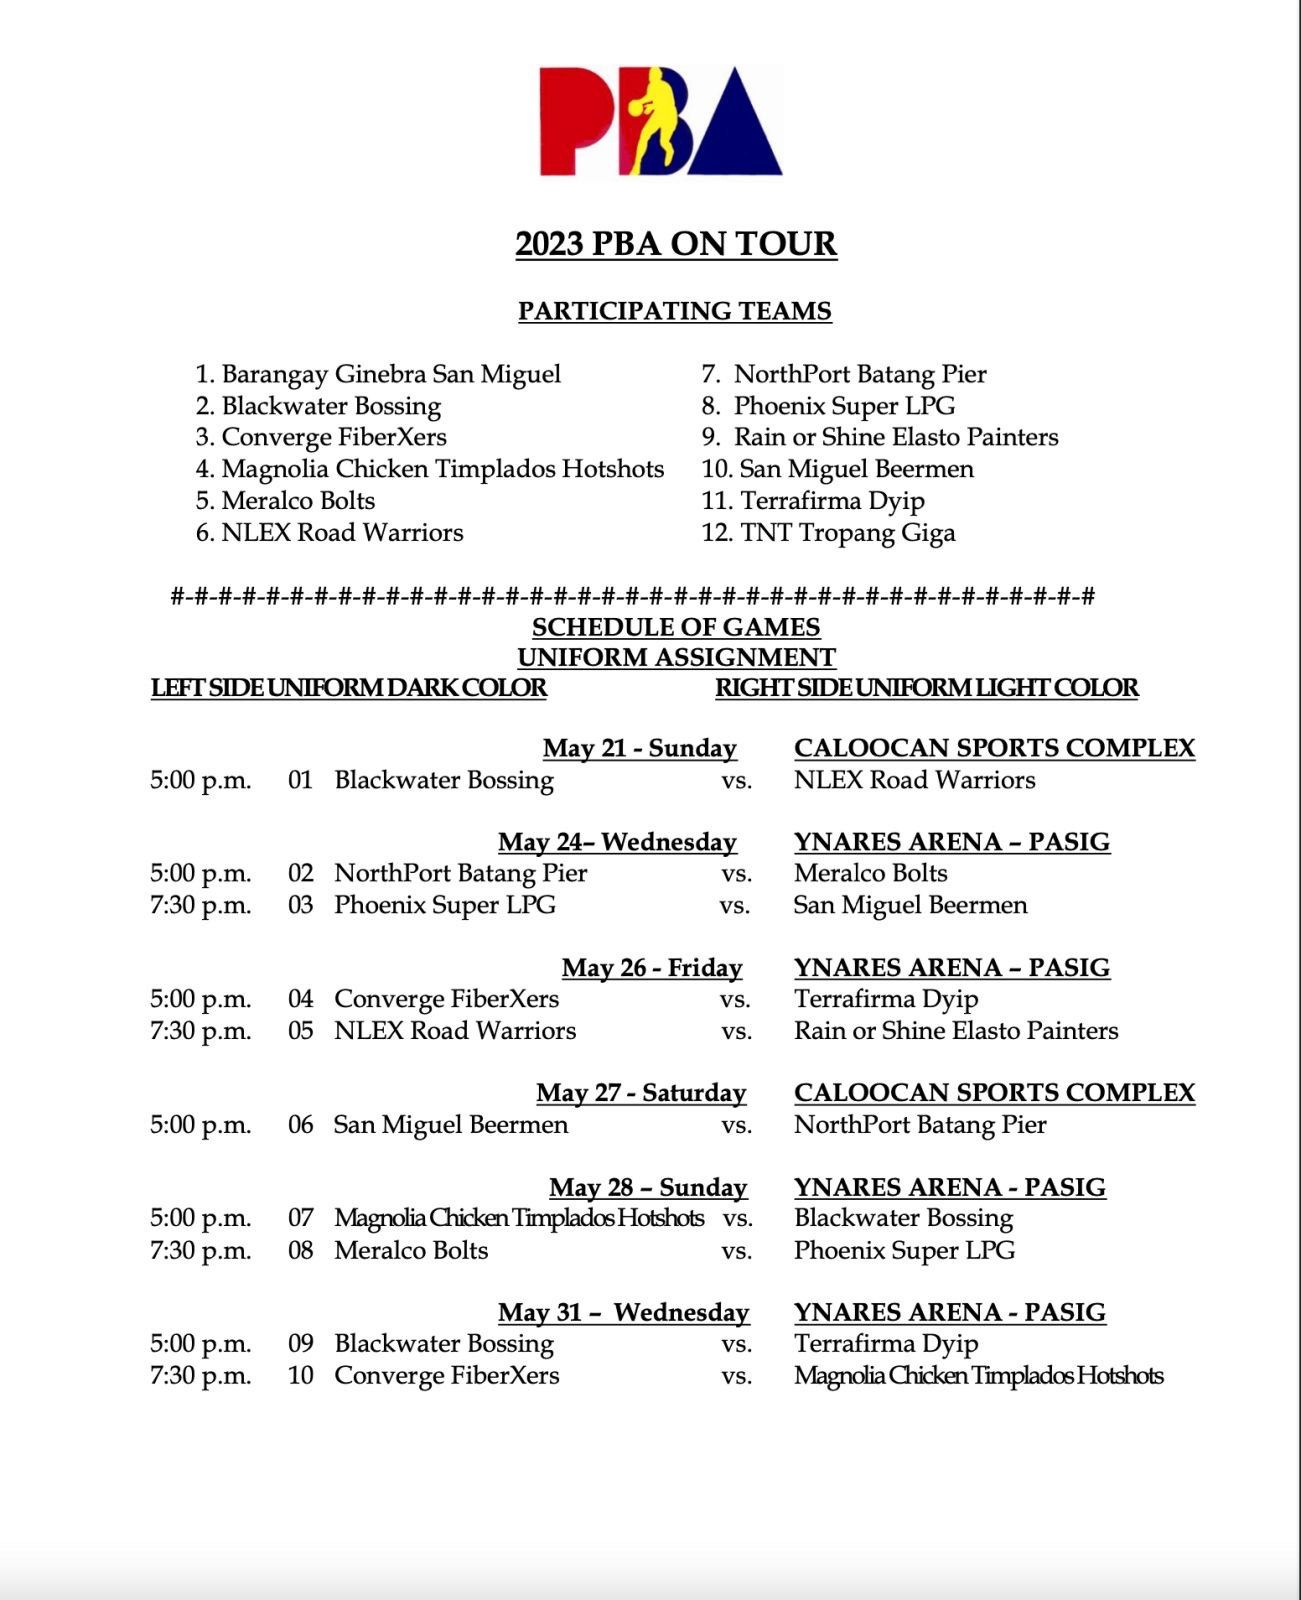 Full PBA On Tour schedule games in Tiaong, Baliuag, Caloocan